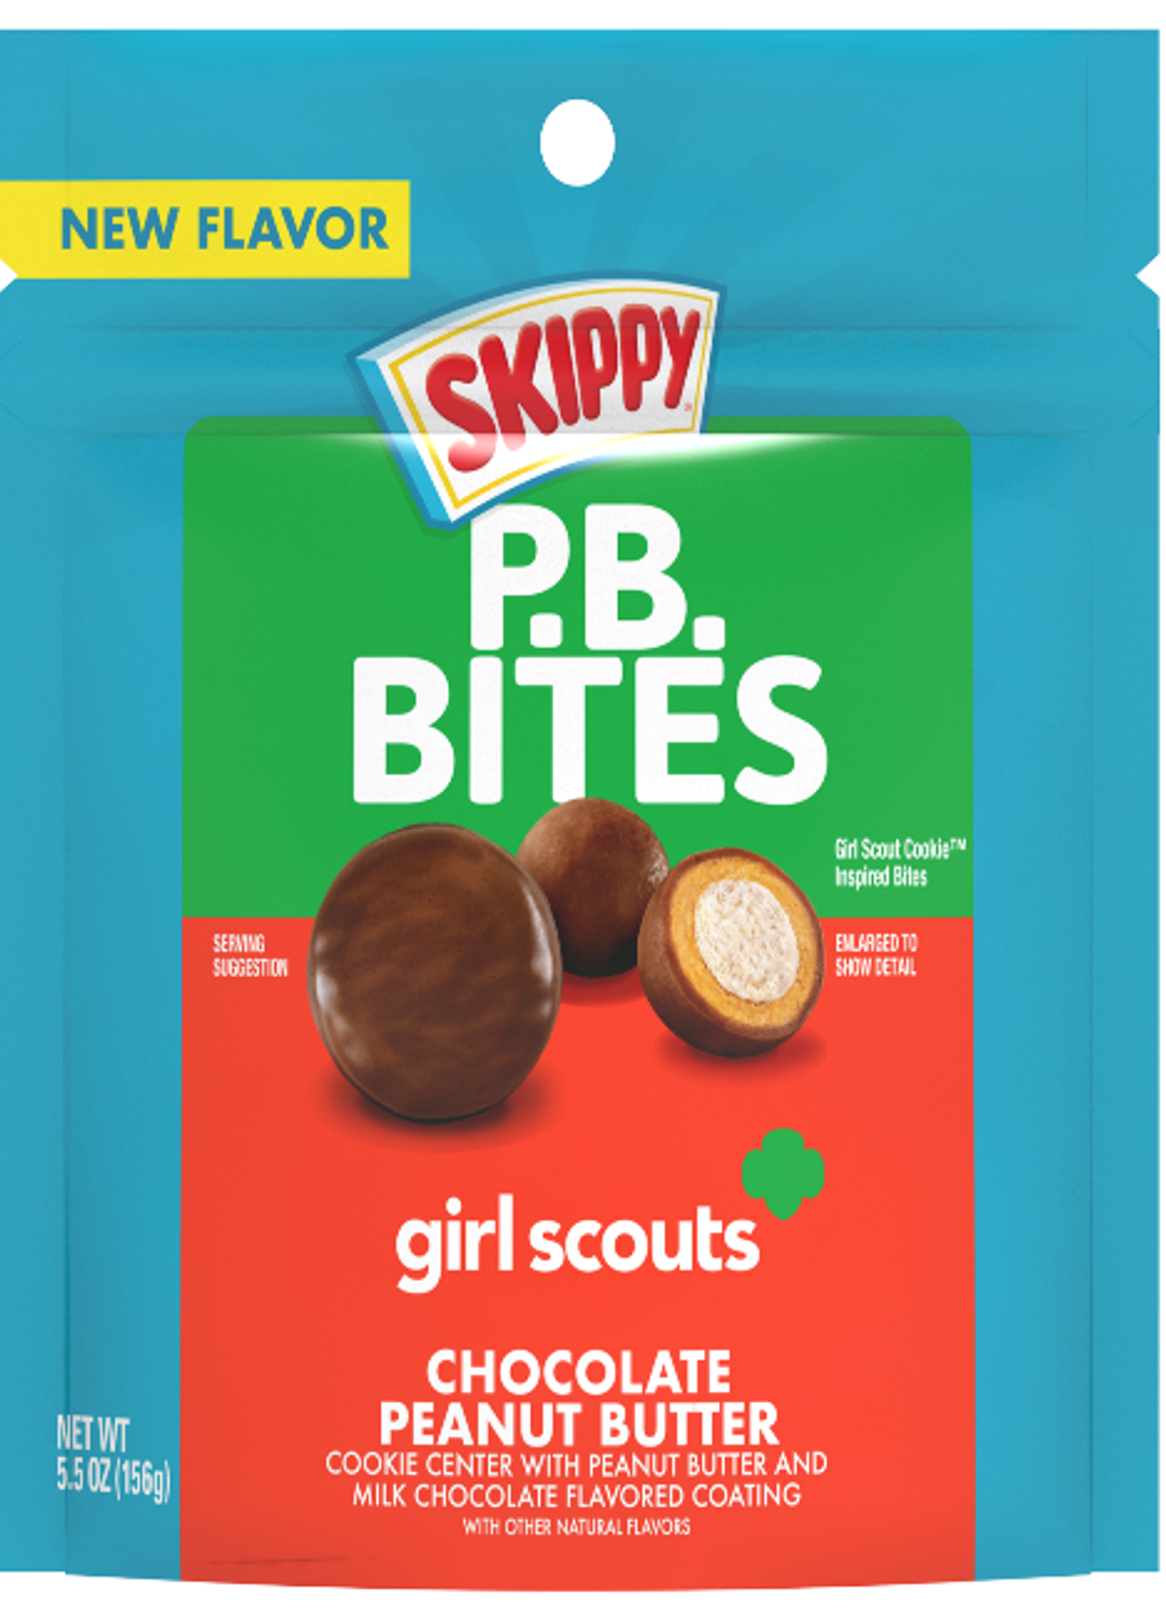 Skippy p.b. bites girl scouts chocolate peanut but